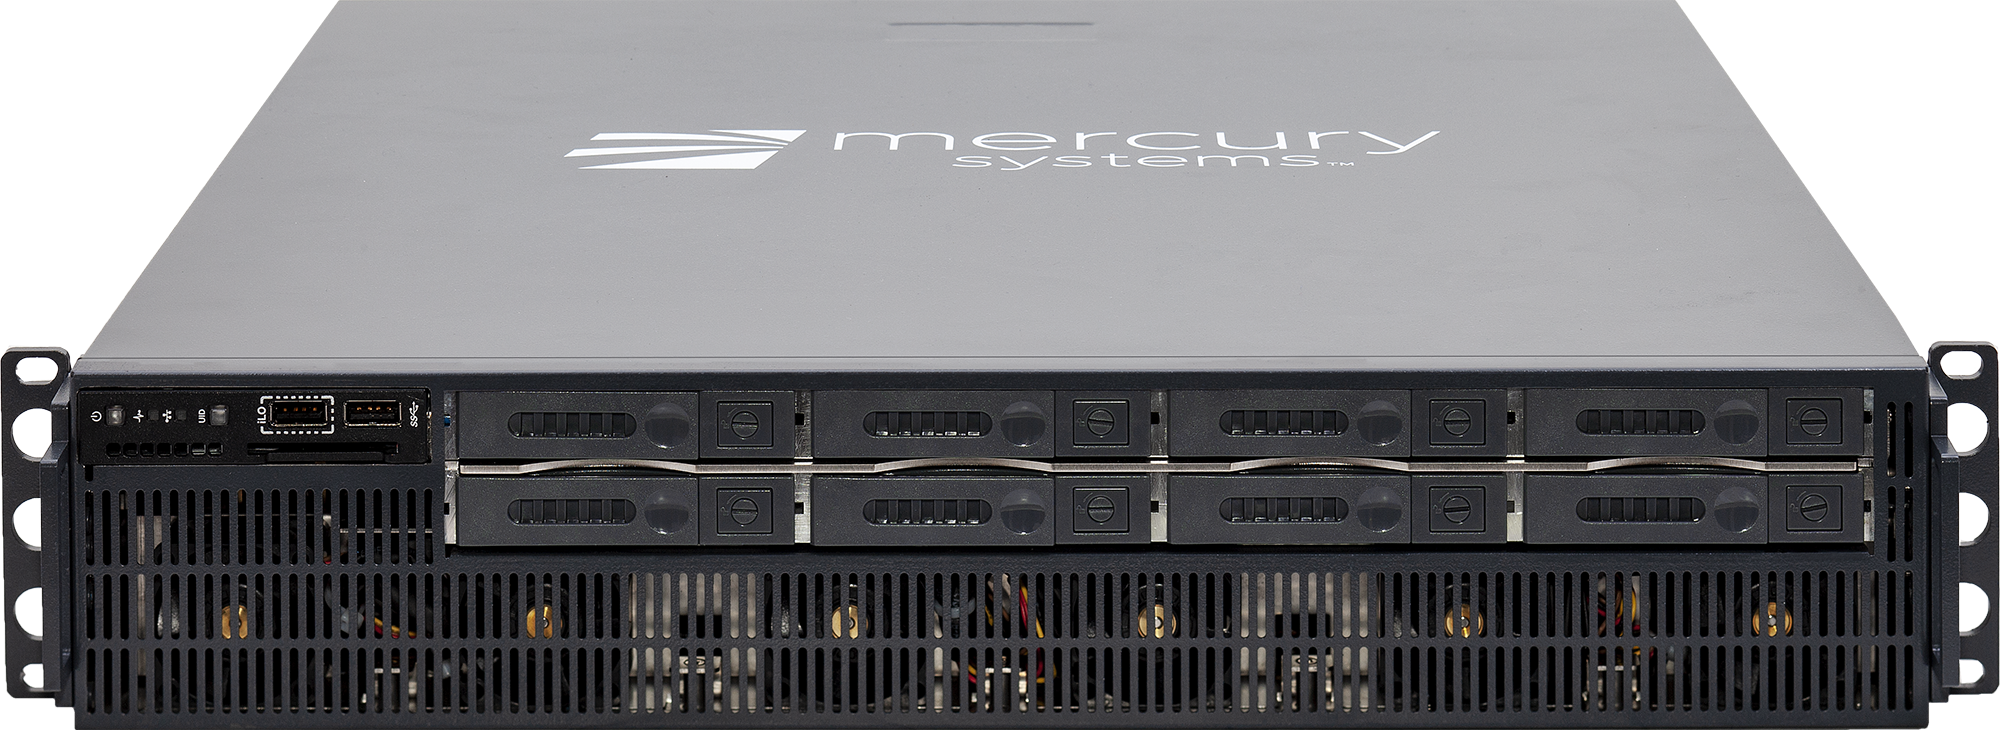 Mercury Systems' new RES-XR6 Alliance 2U Rackmount Server